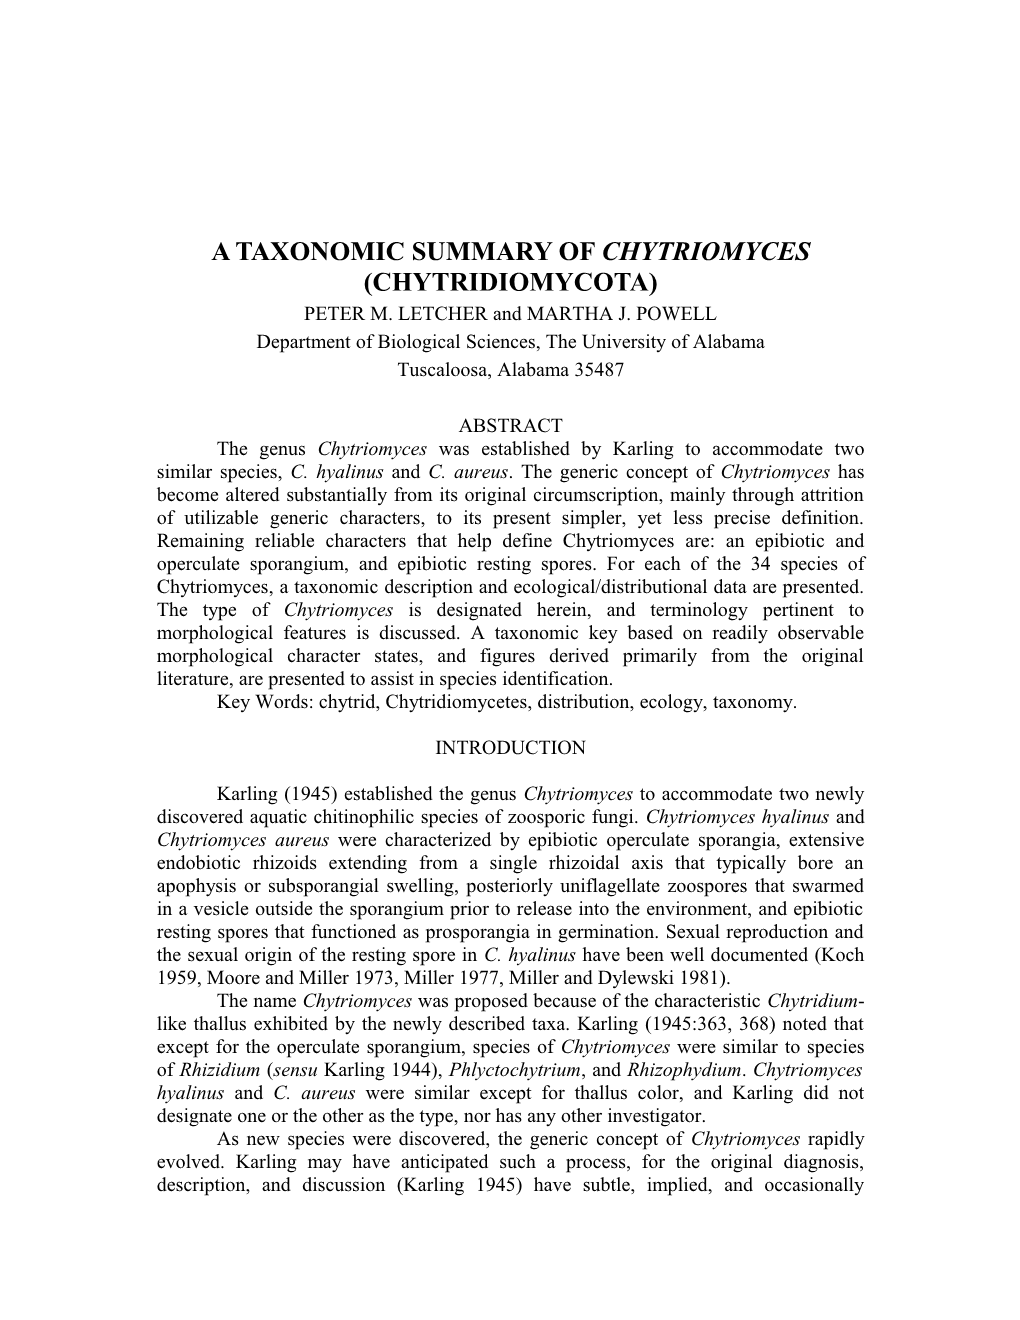 A Taxonomic Summary of Chytriomyces (Chytridiomycota)